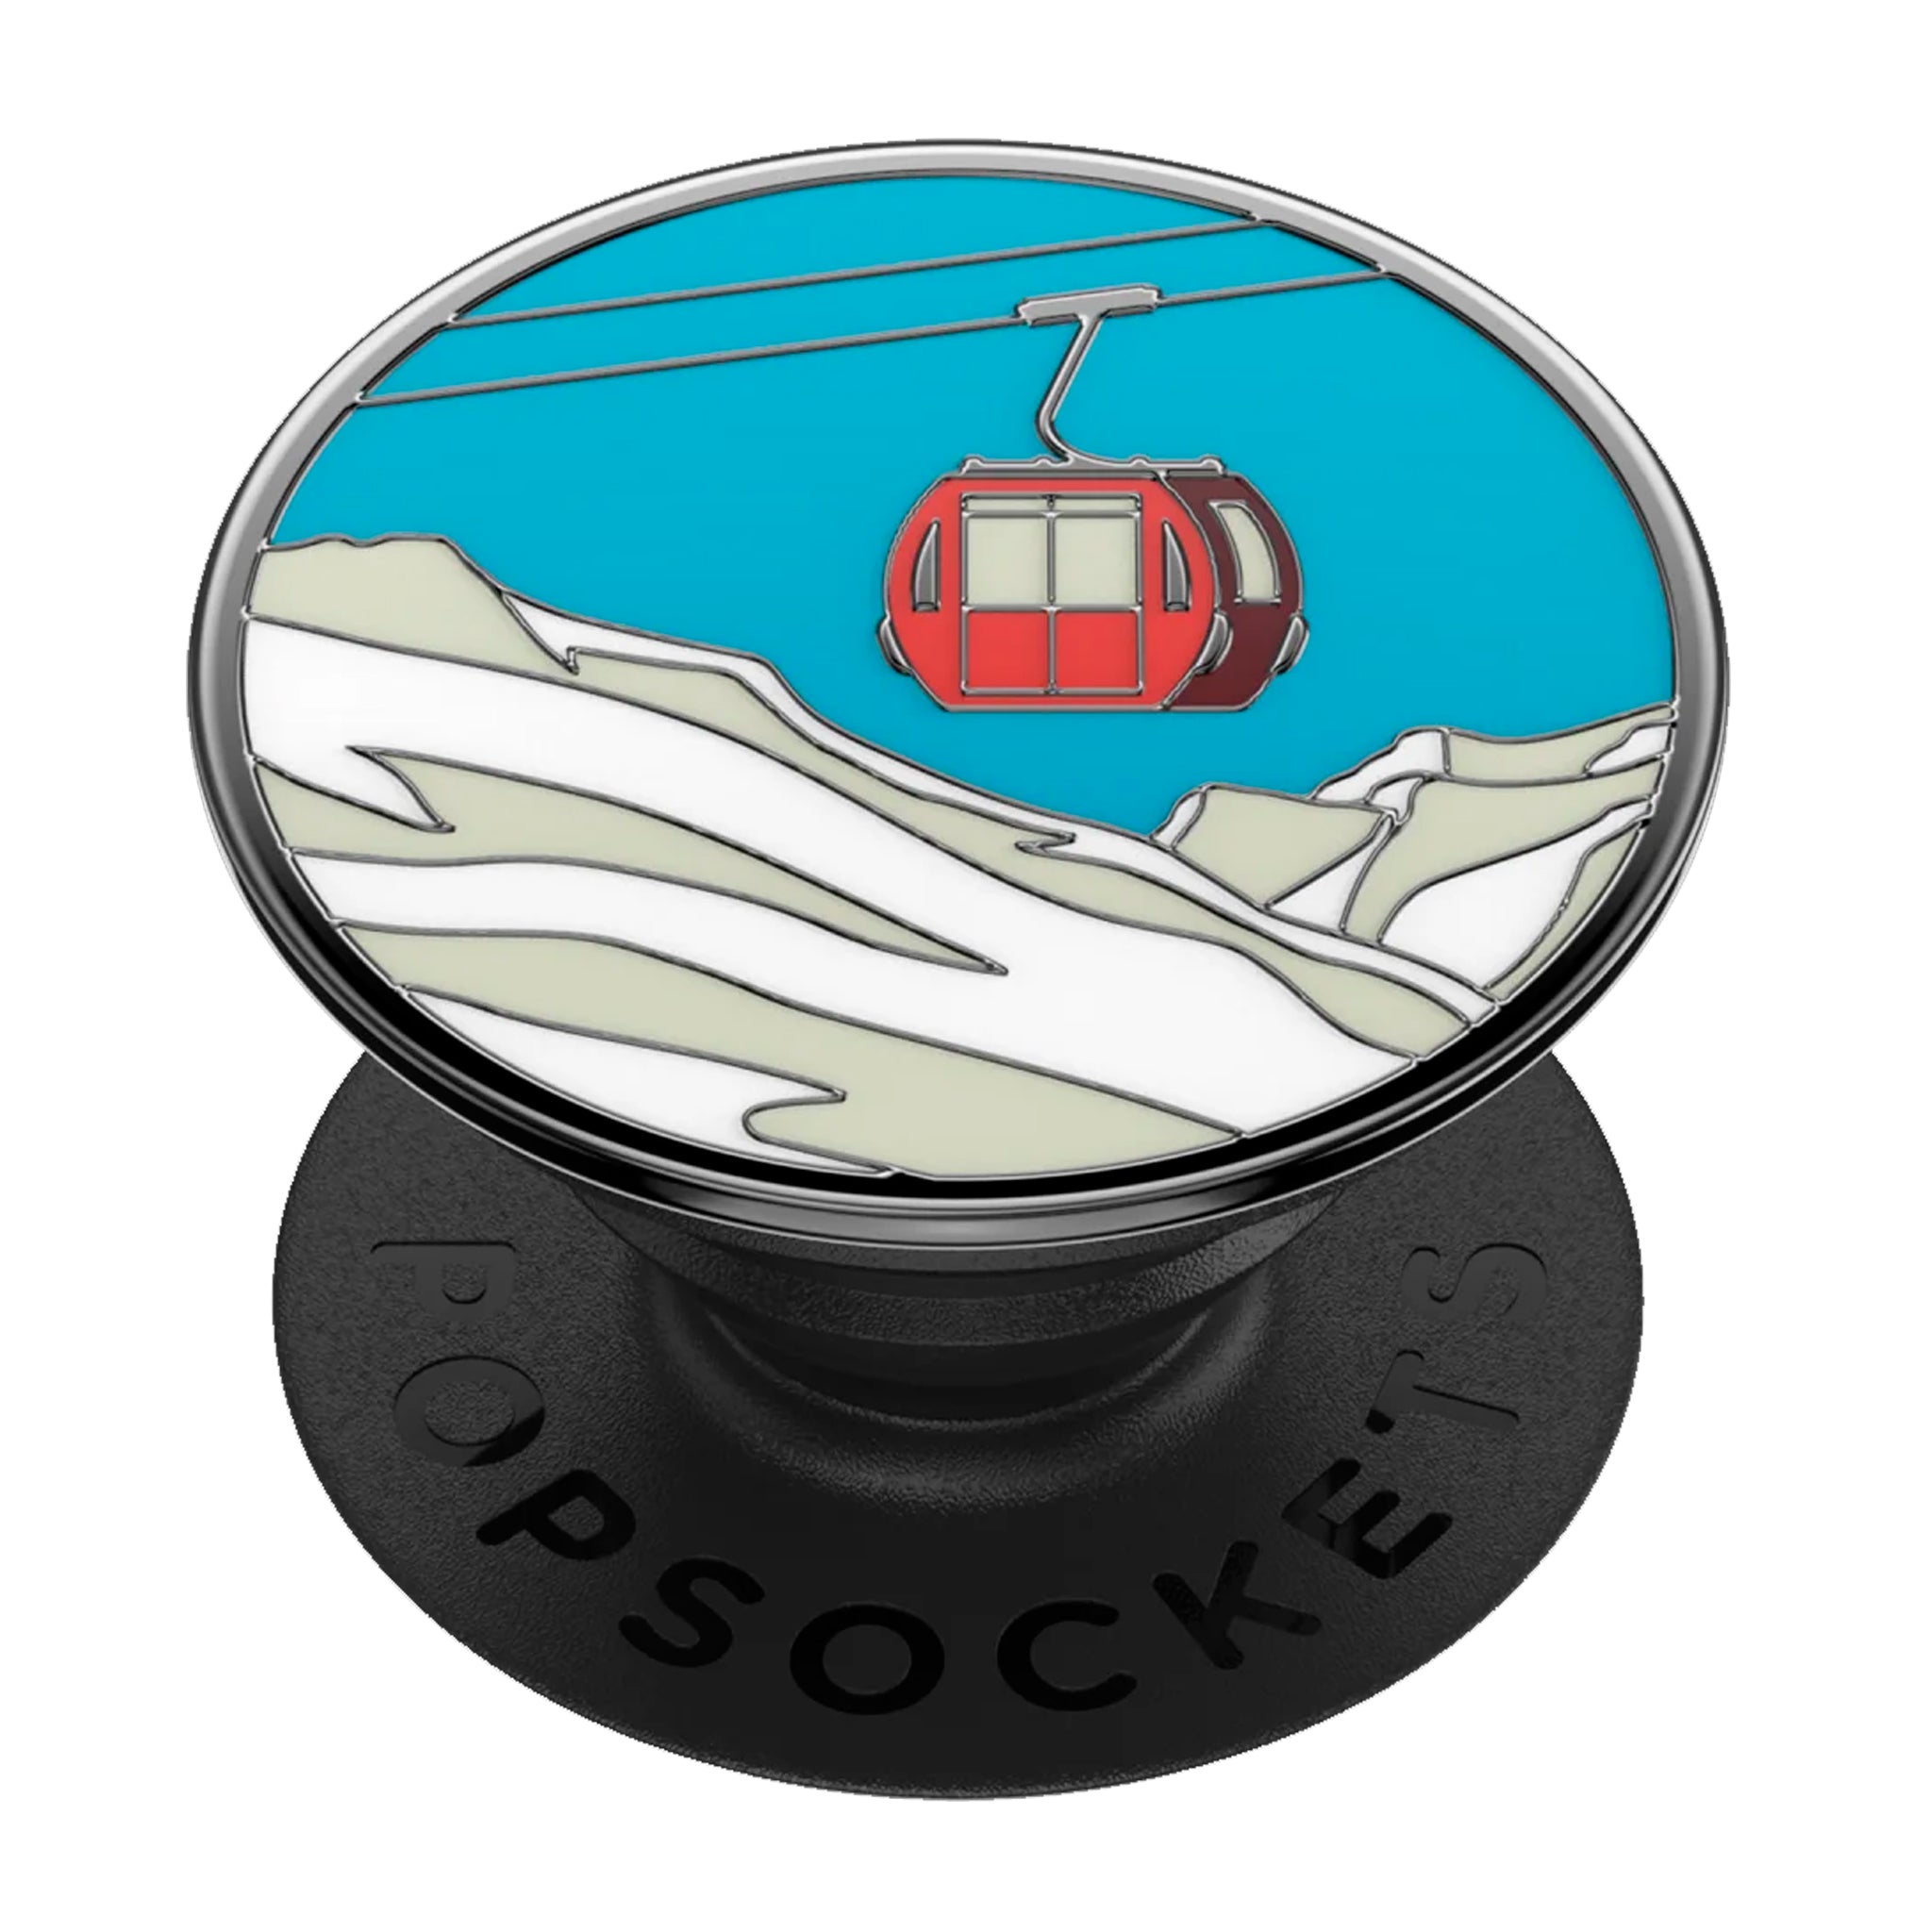 Popsockets - Popgrip Premium - Enamel Vintage Gondola